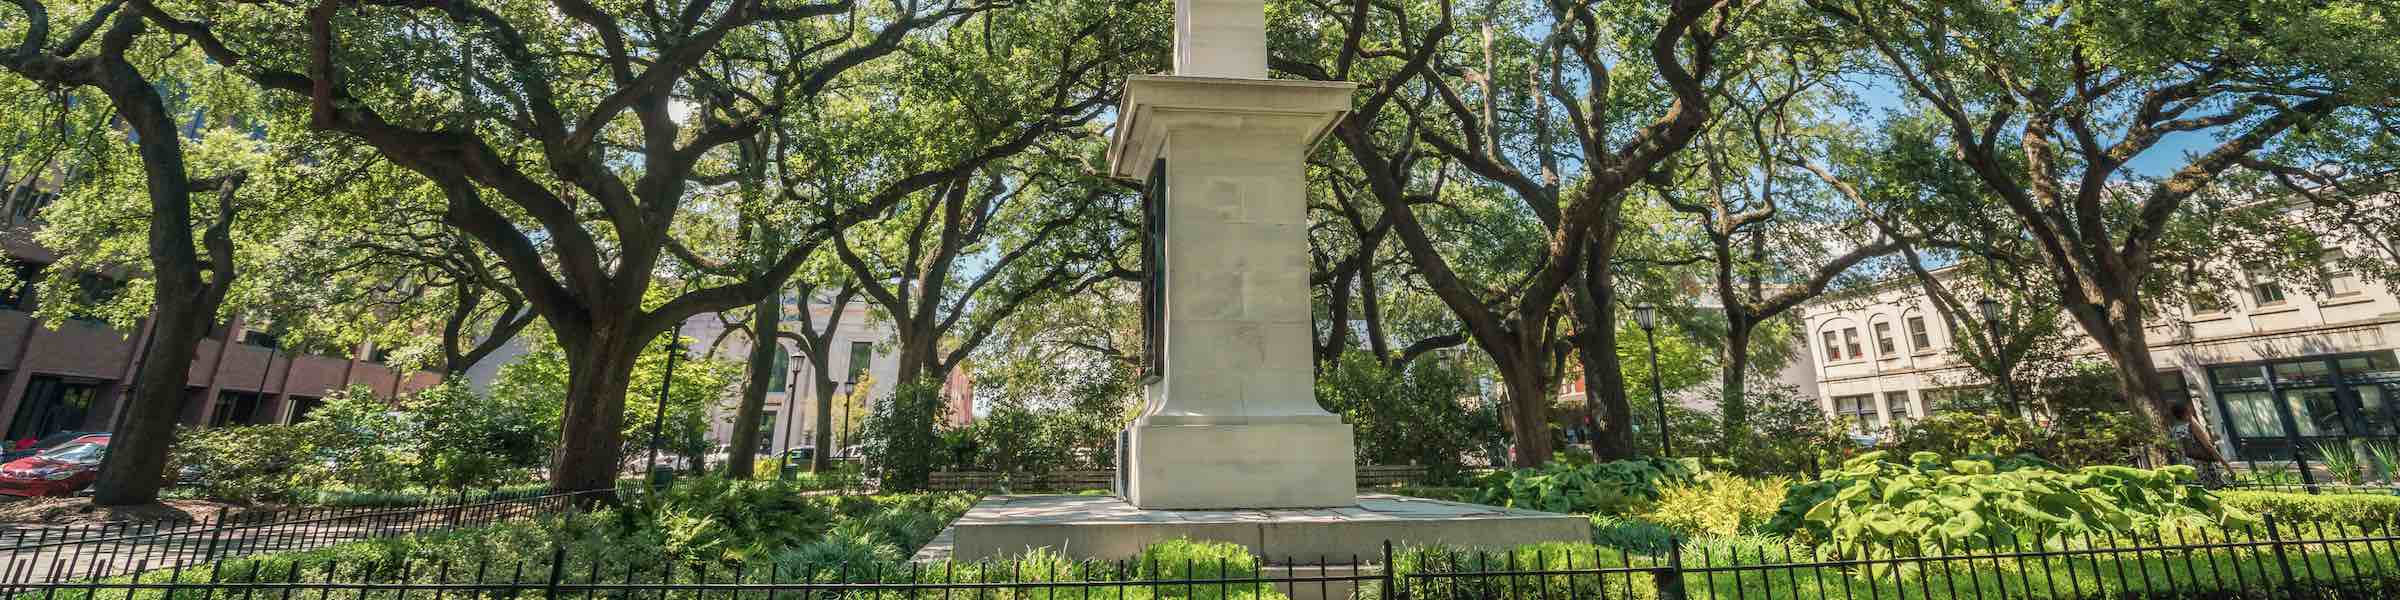 The Greene Monument in Johnson Square, Savannah, GA.